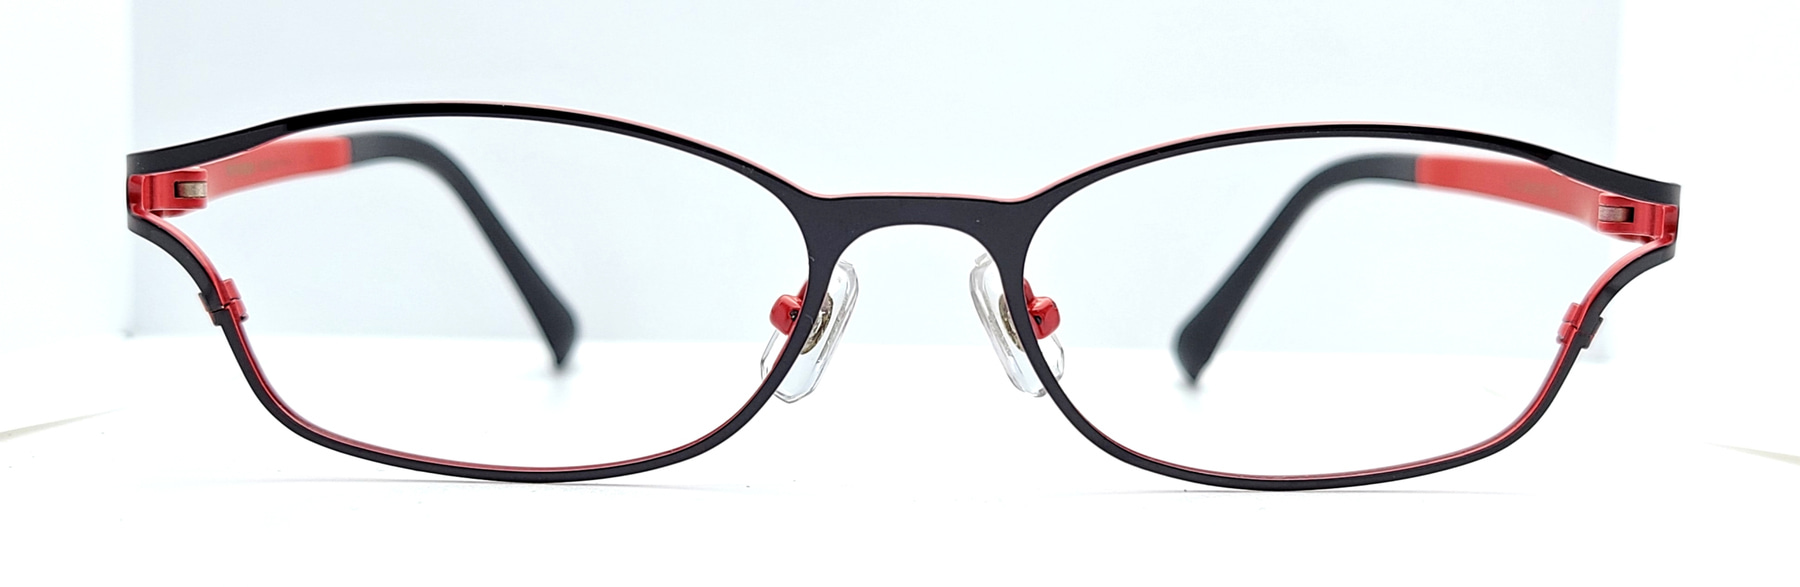 MINIHOUSE M-1314, Korean glasses, sunglasses, eyeglasses, glasses